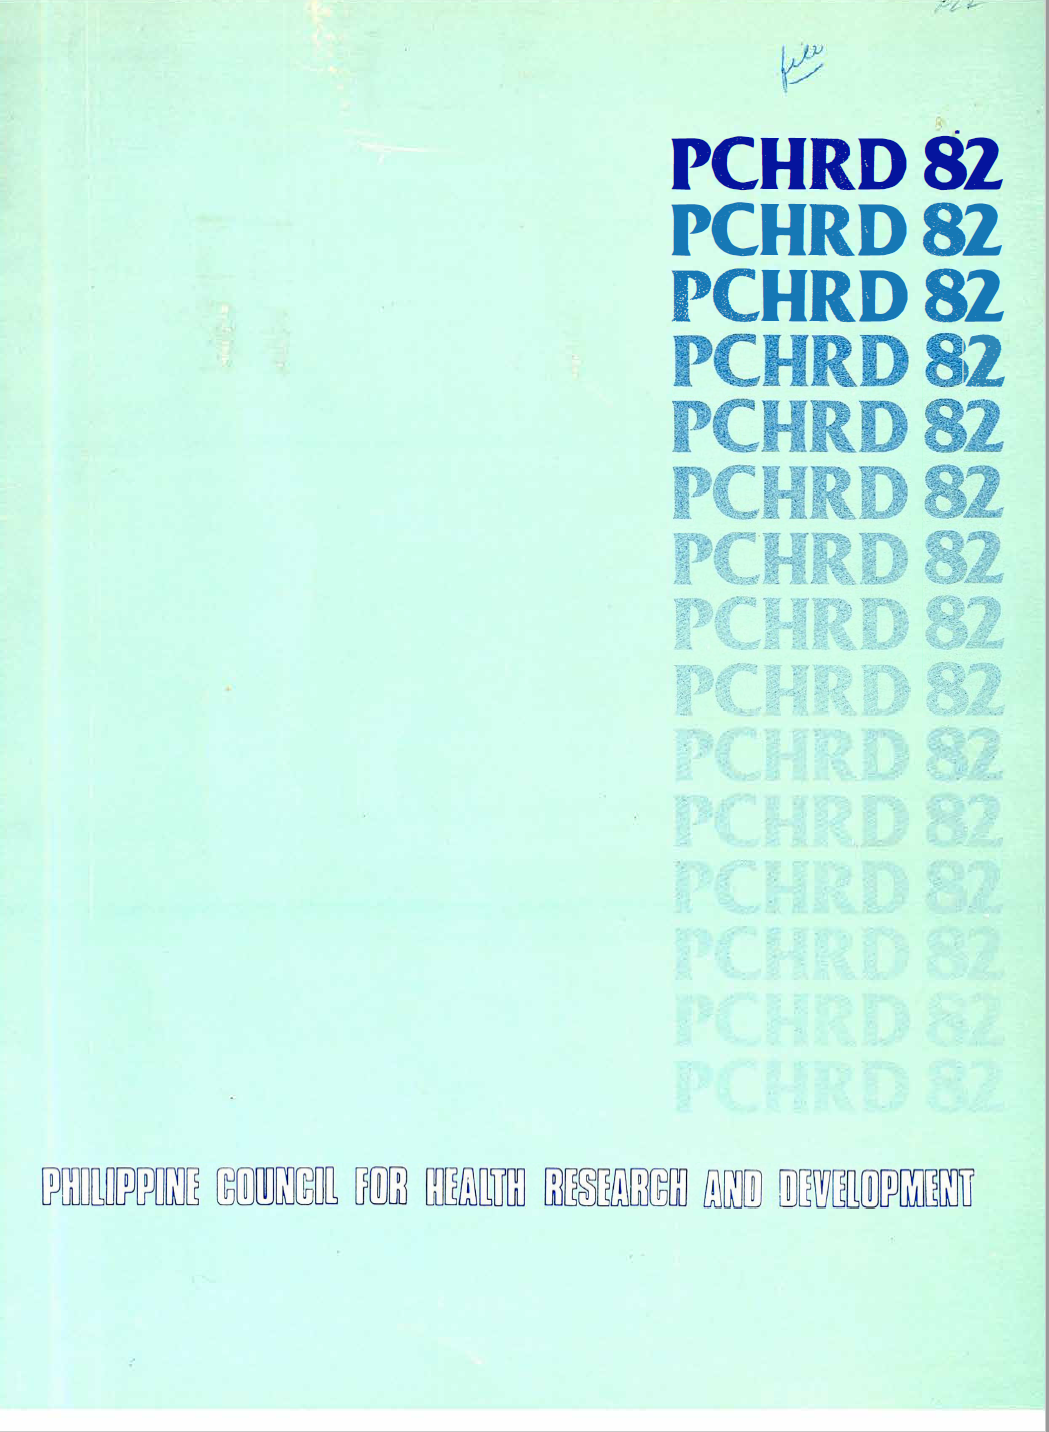 1982 Annual Report